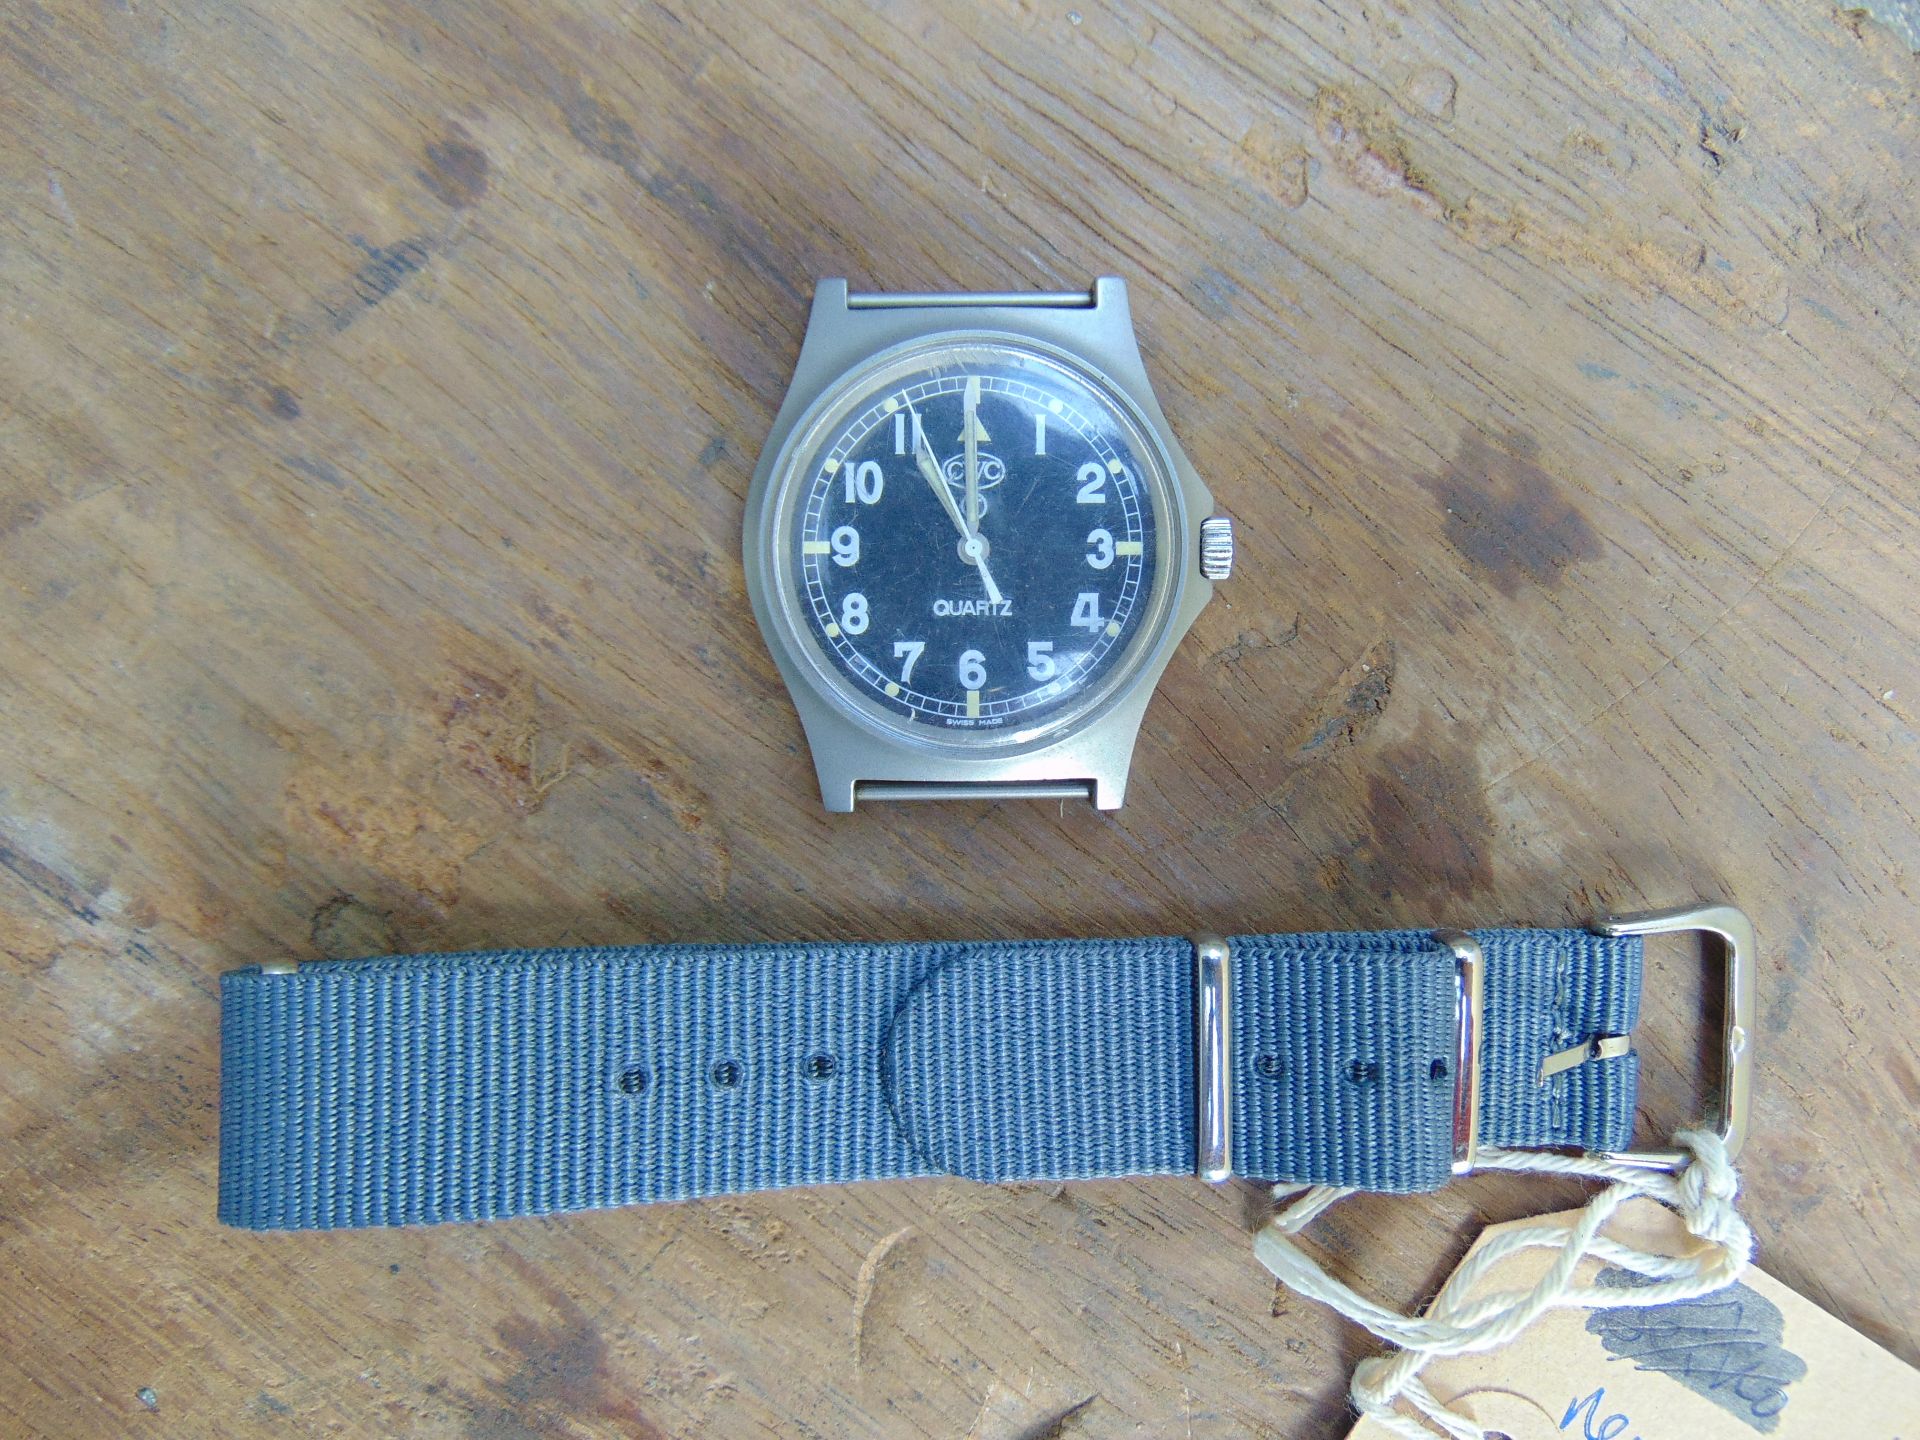 1 Genuine British Army, CWC quartz wrist watch - Image 3 of 5